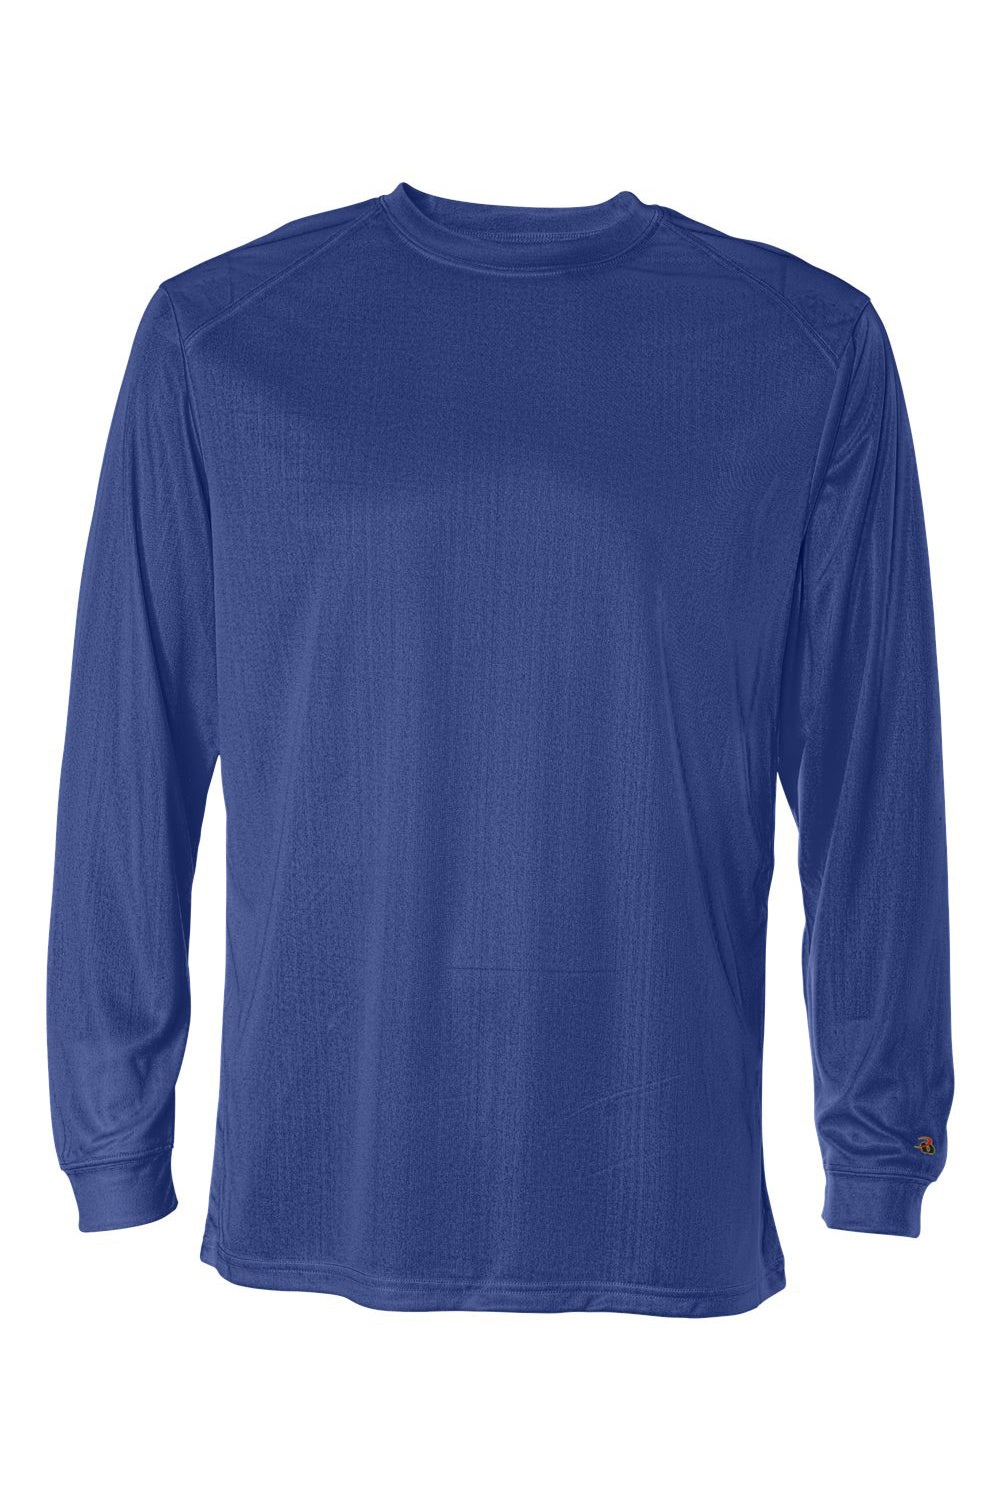 Badger 4104 Mens B-Core Moisture Wicking Long Sleeve Crewneck T-Shirt Royal Blue Flat Front